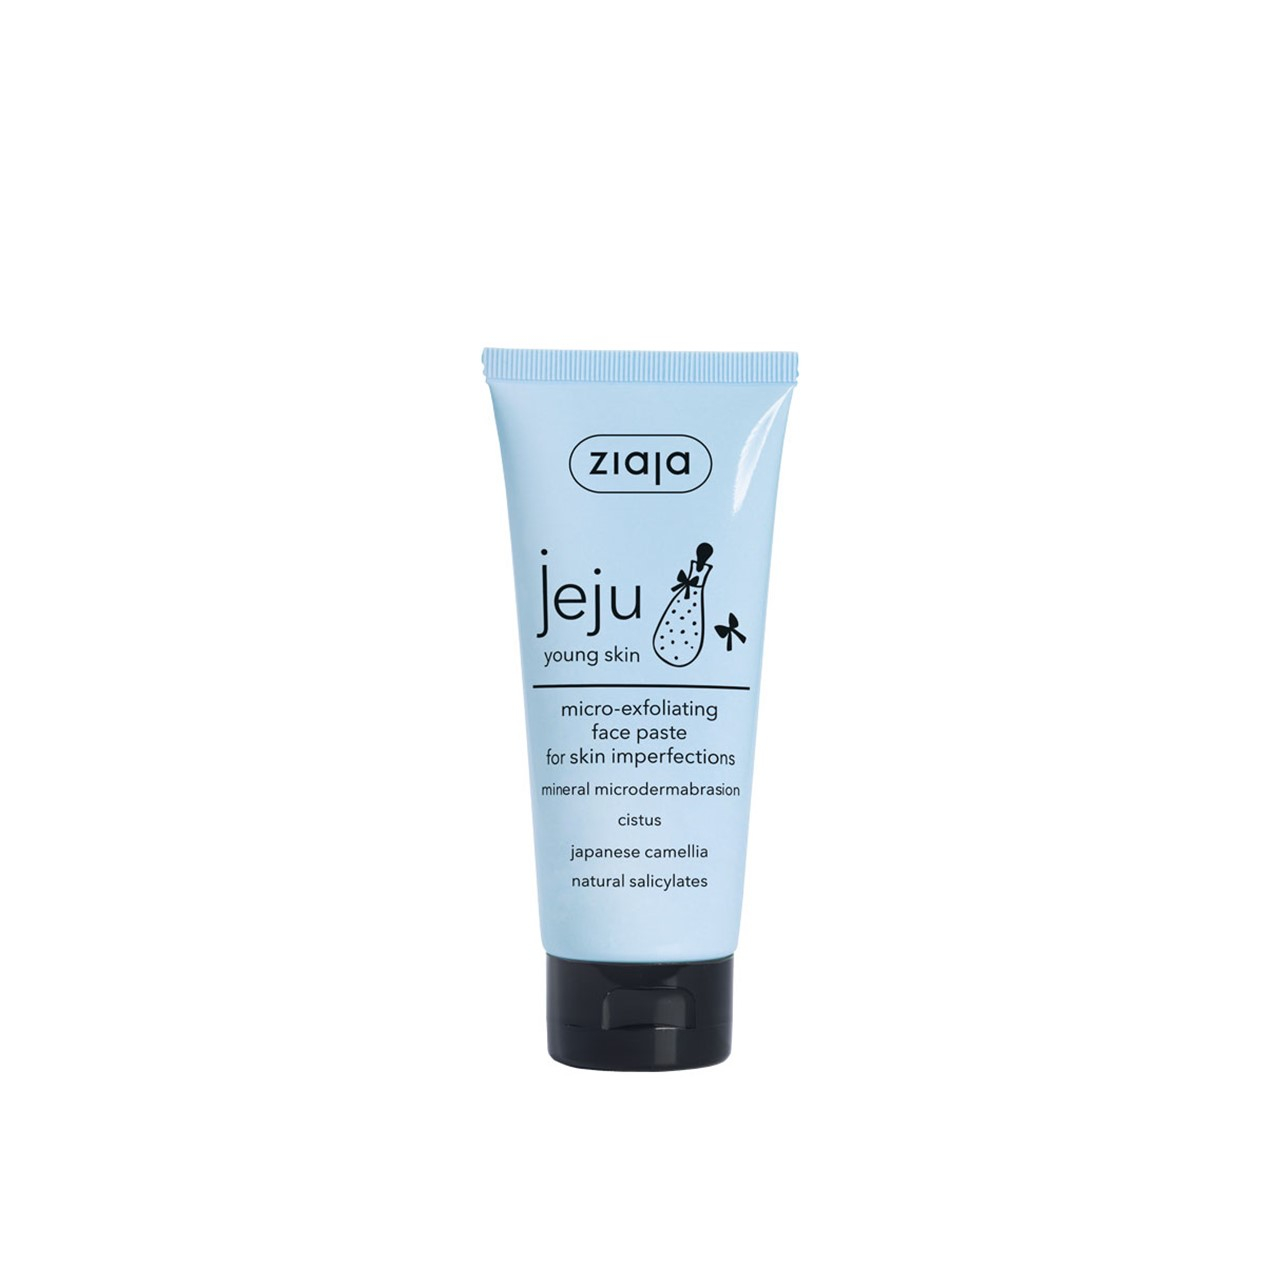 Ziaja Jeju Young Skin Micro-Exfoliating Face Paste 75ml